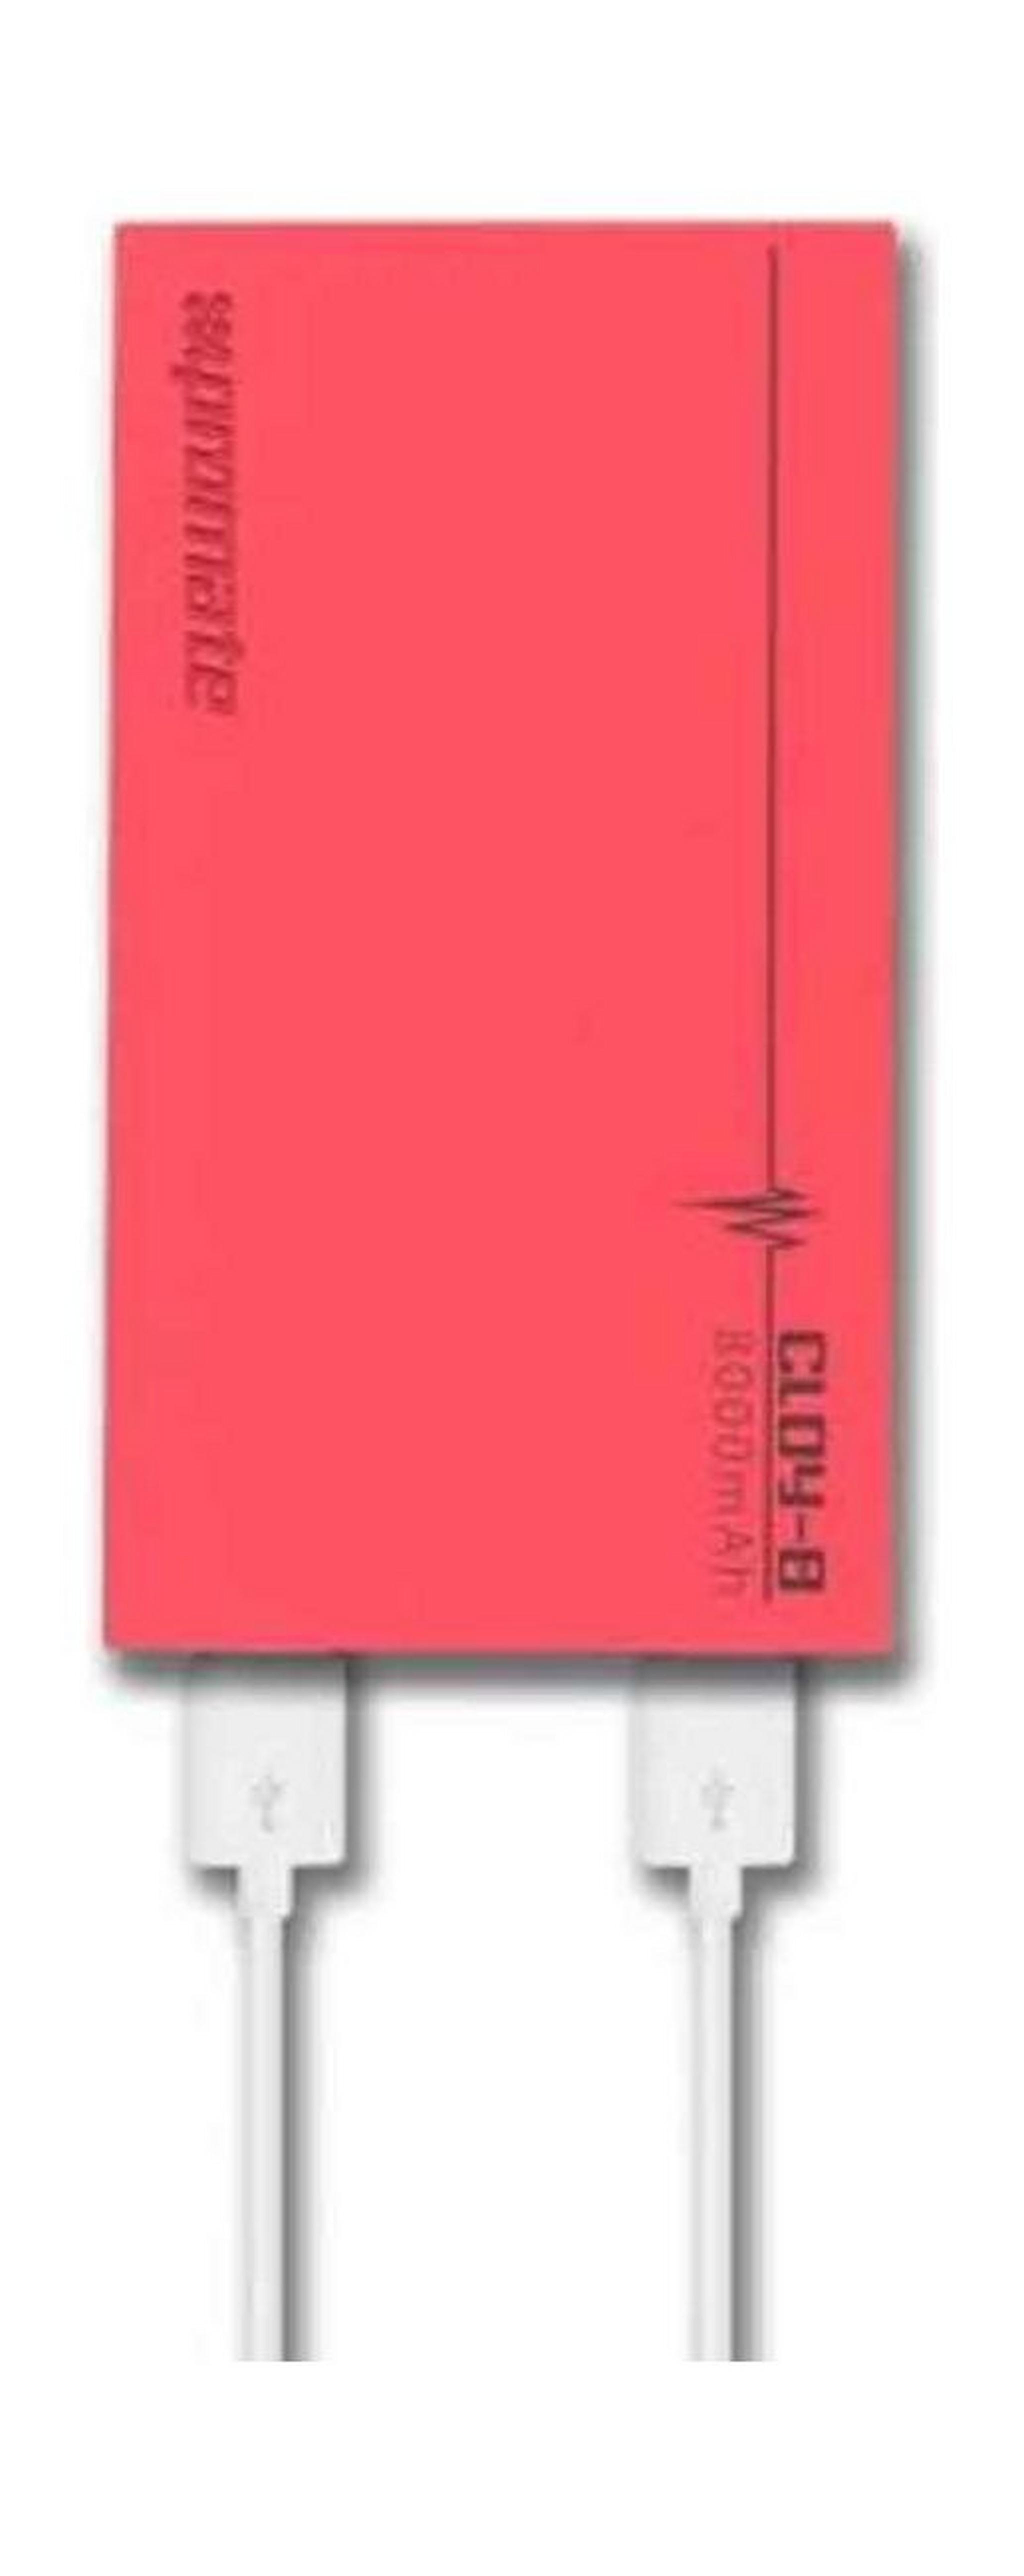 Promate Cloy-8 Premium Dual USB 8000mAh Power Bank - Pink